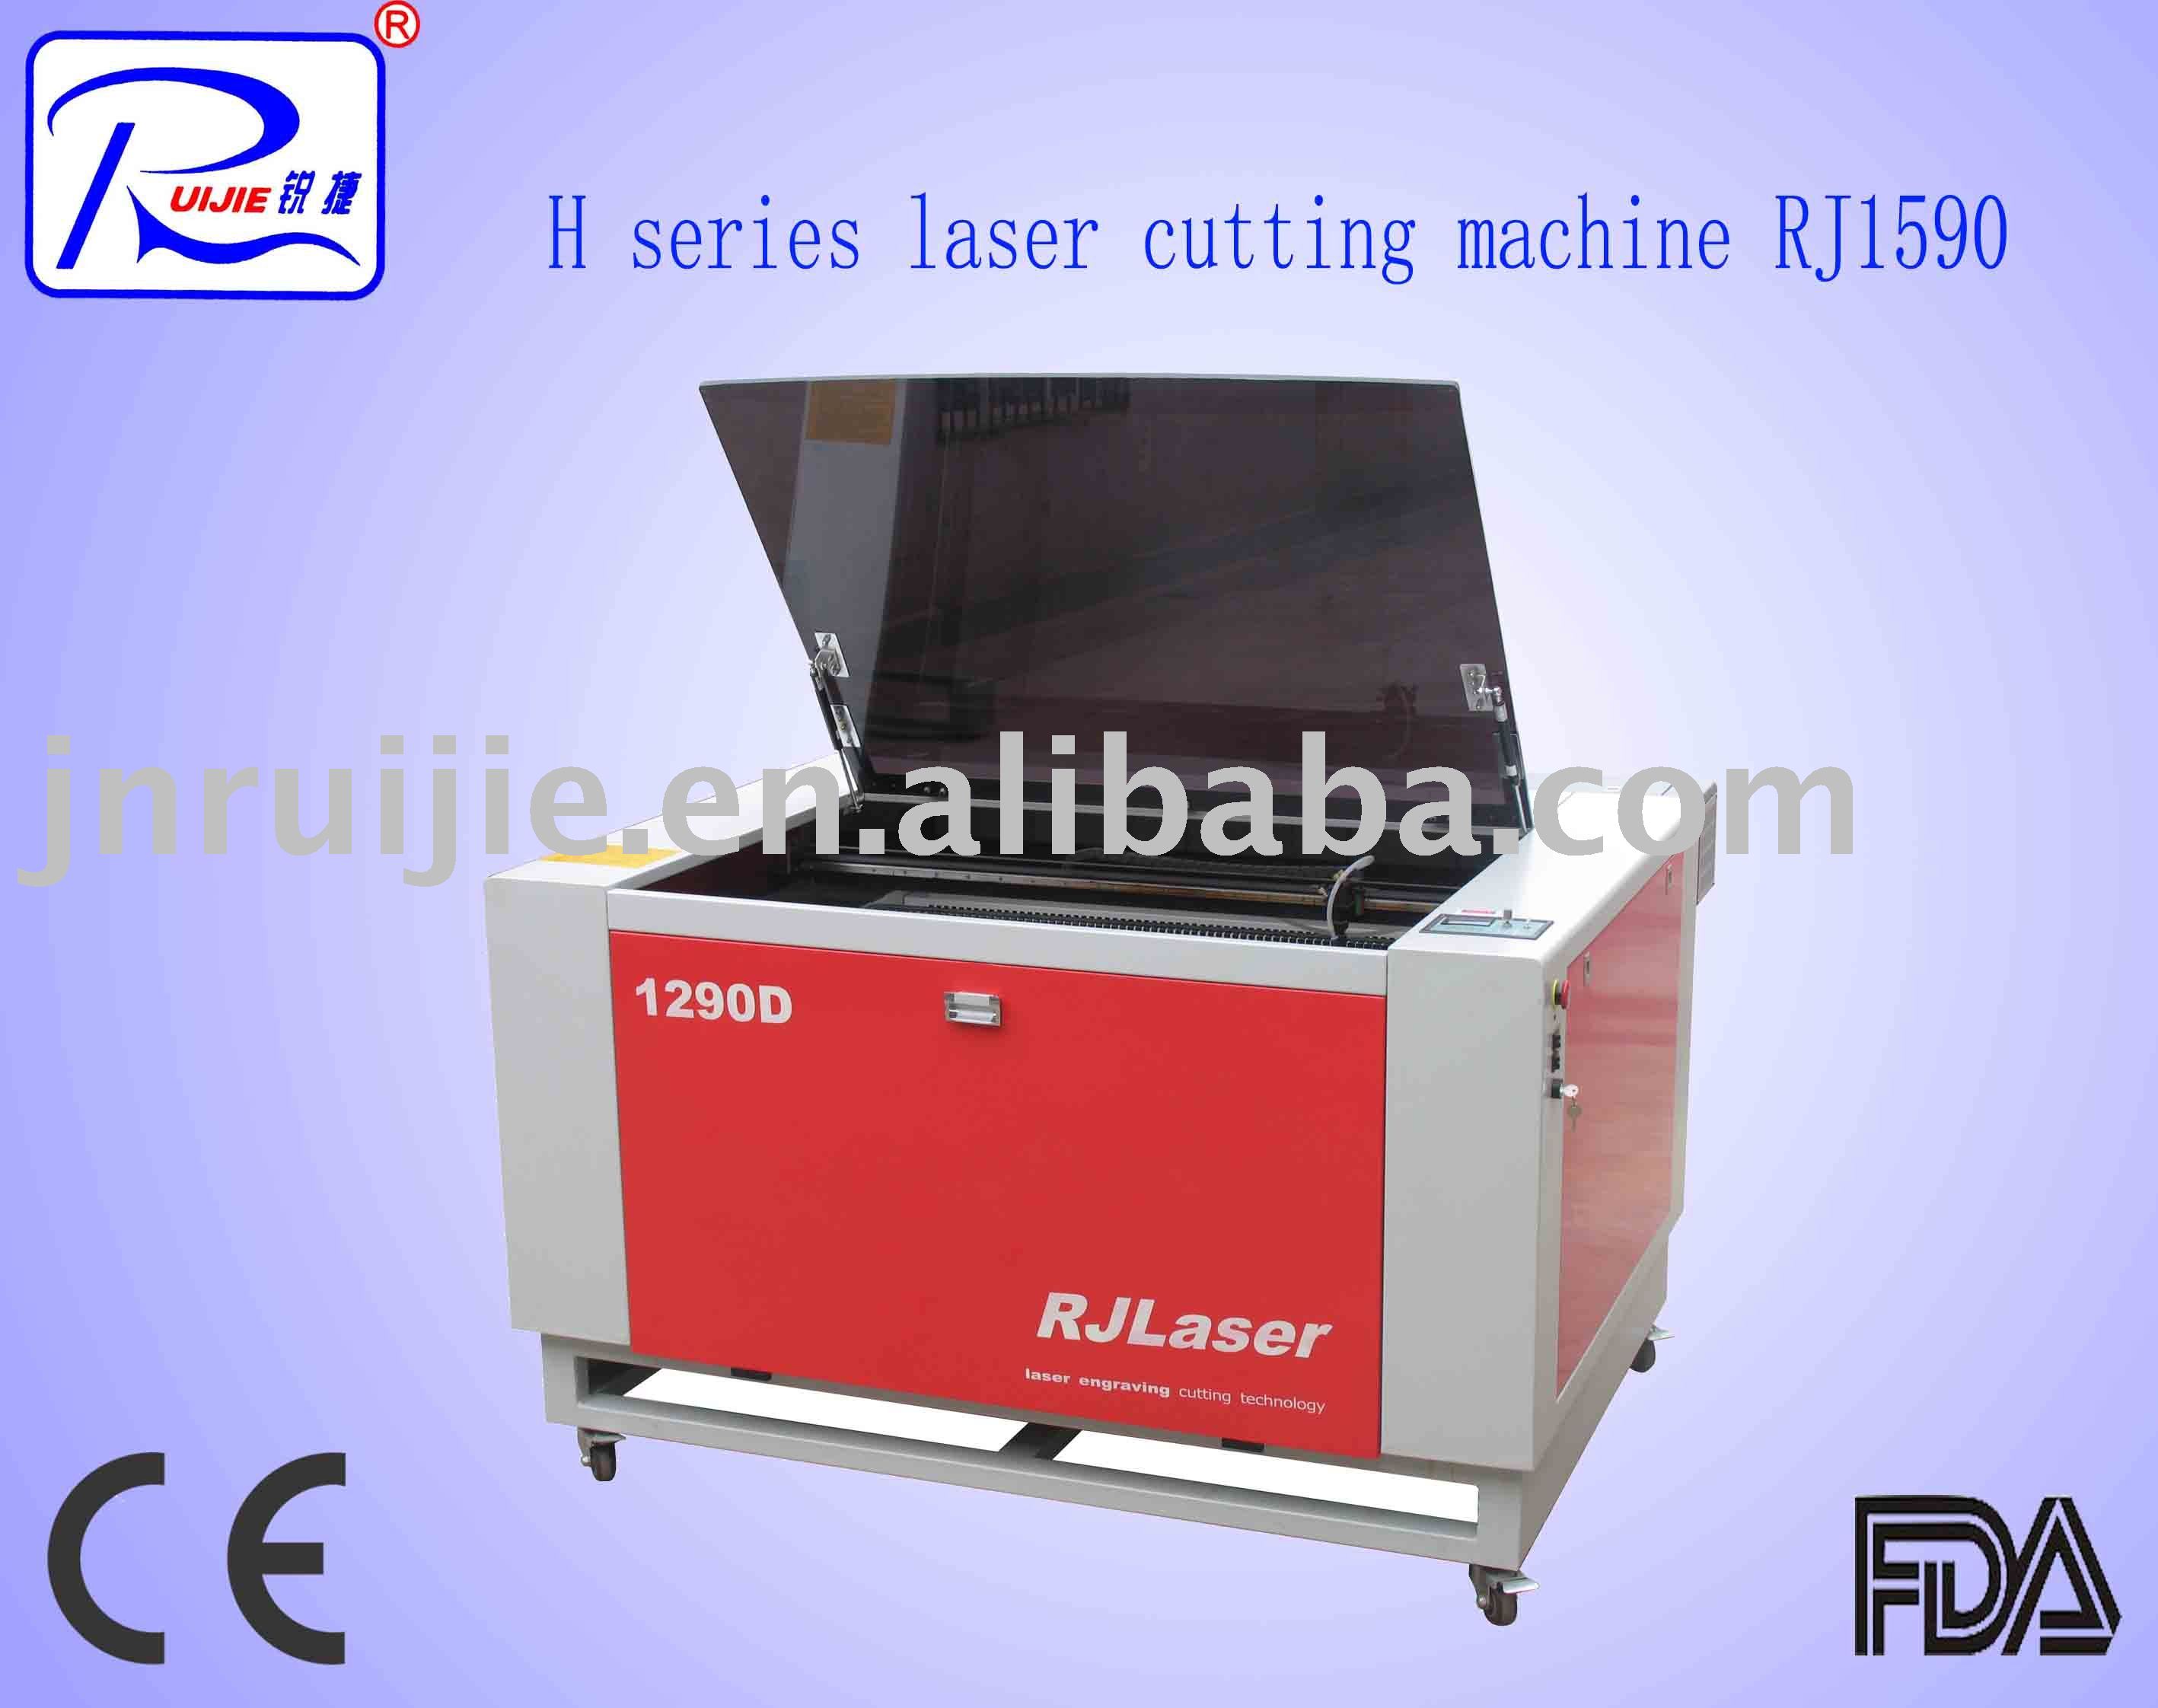 H series laser cutting machine RJ1290